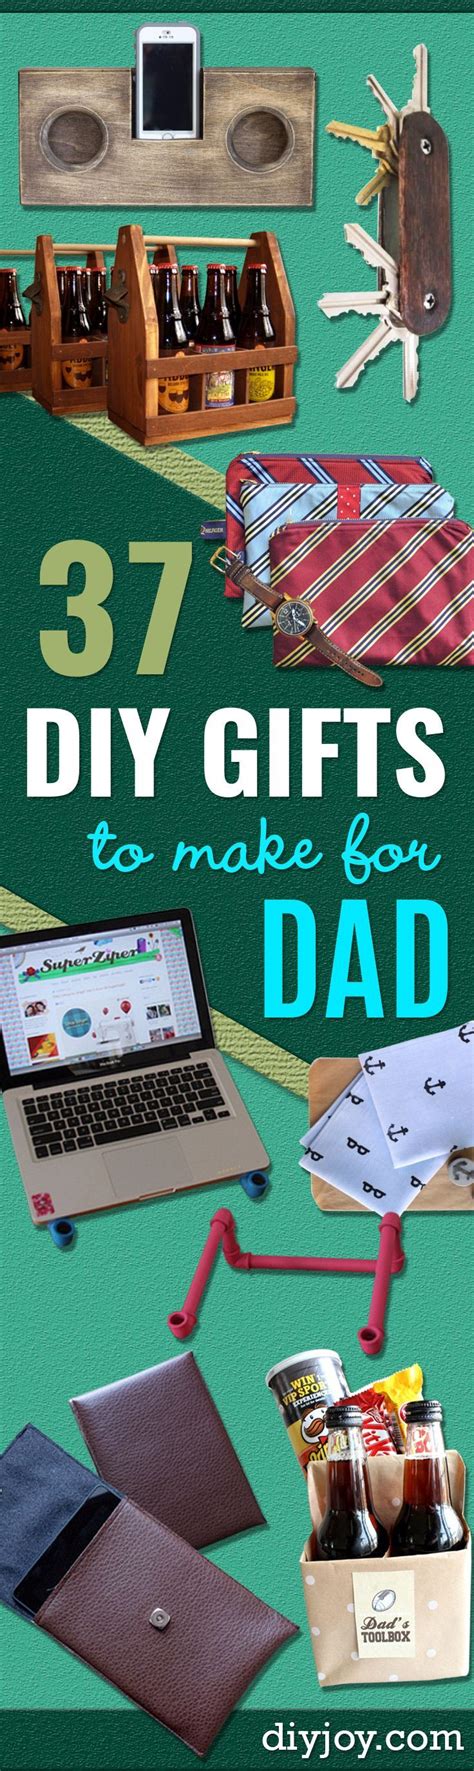 Homemade birthday gifts easy last minute diy gifts for dad. 37 DIY Gifts to Make for Dad | Diy gifts to make, Diy ...